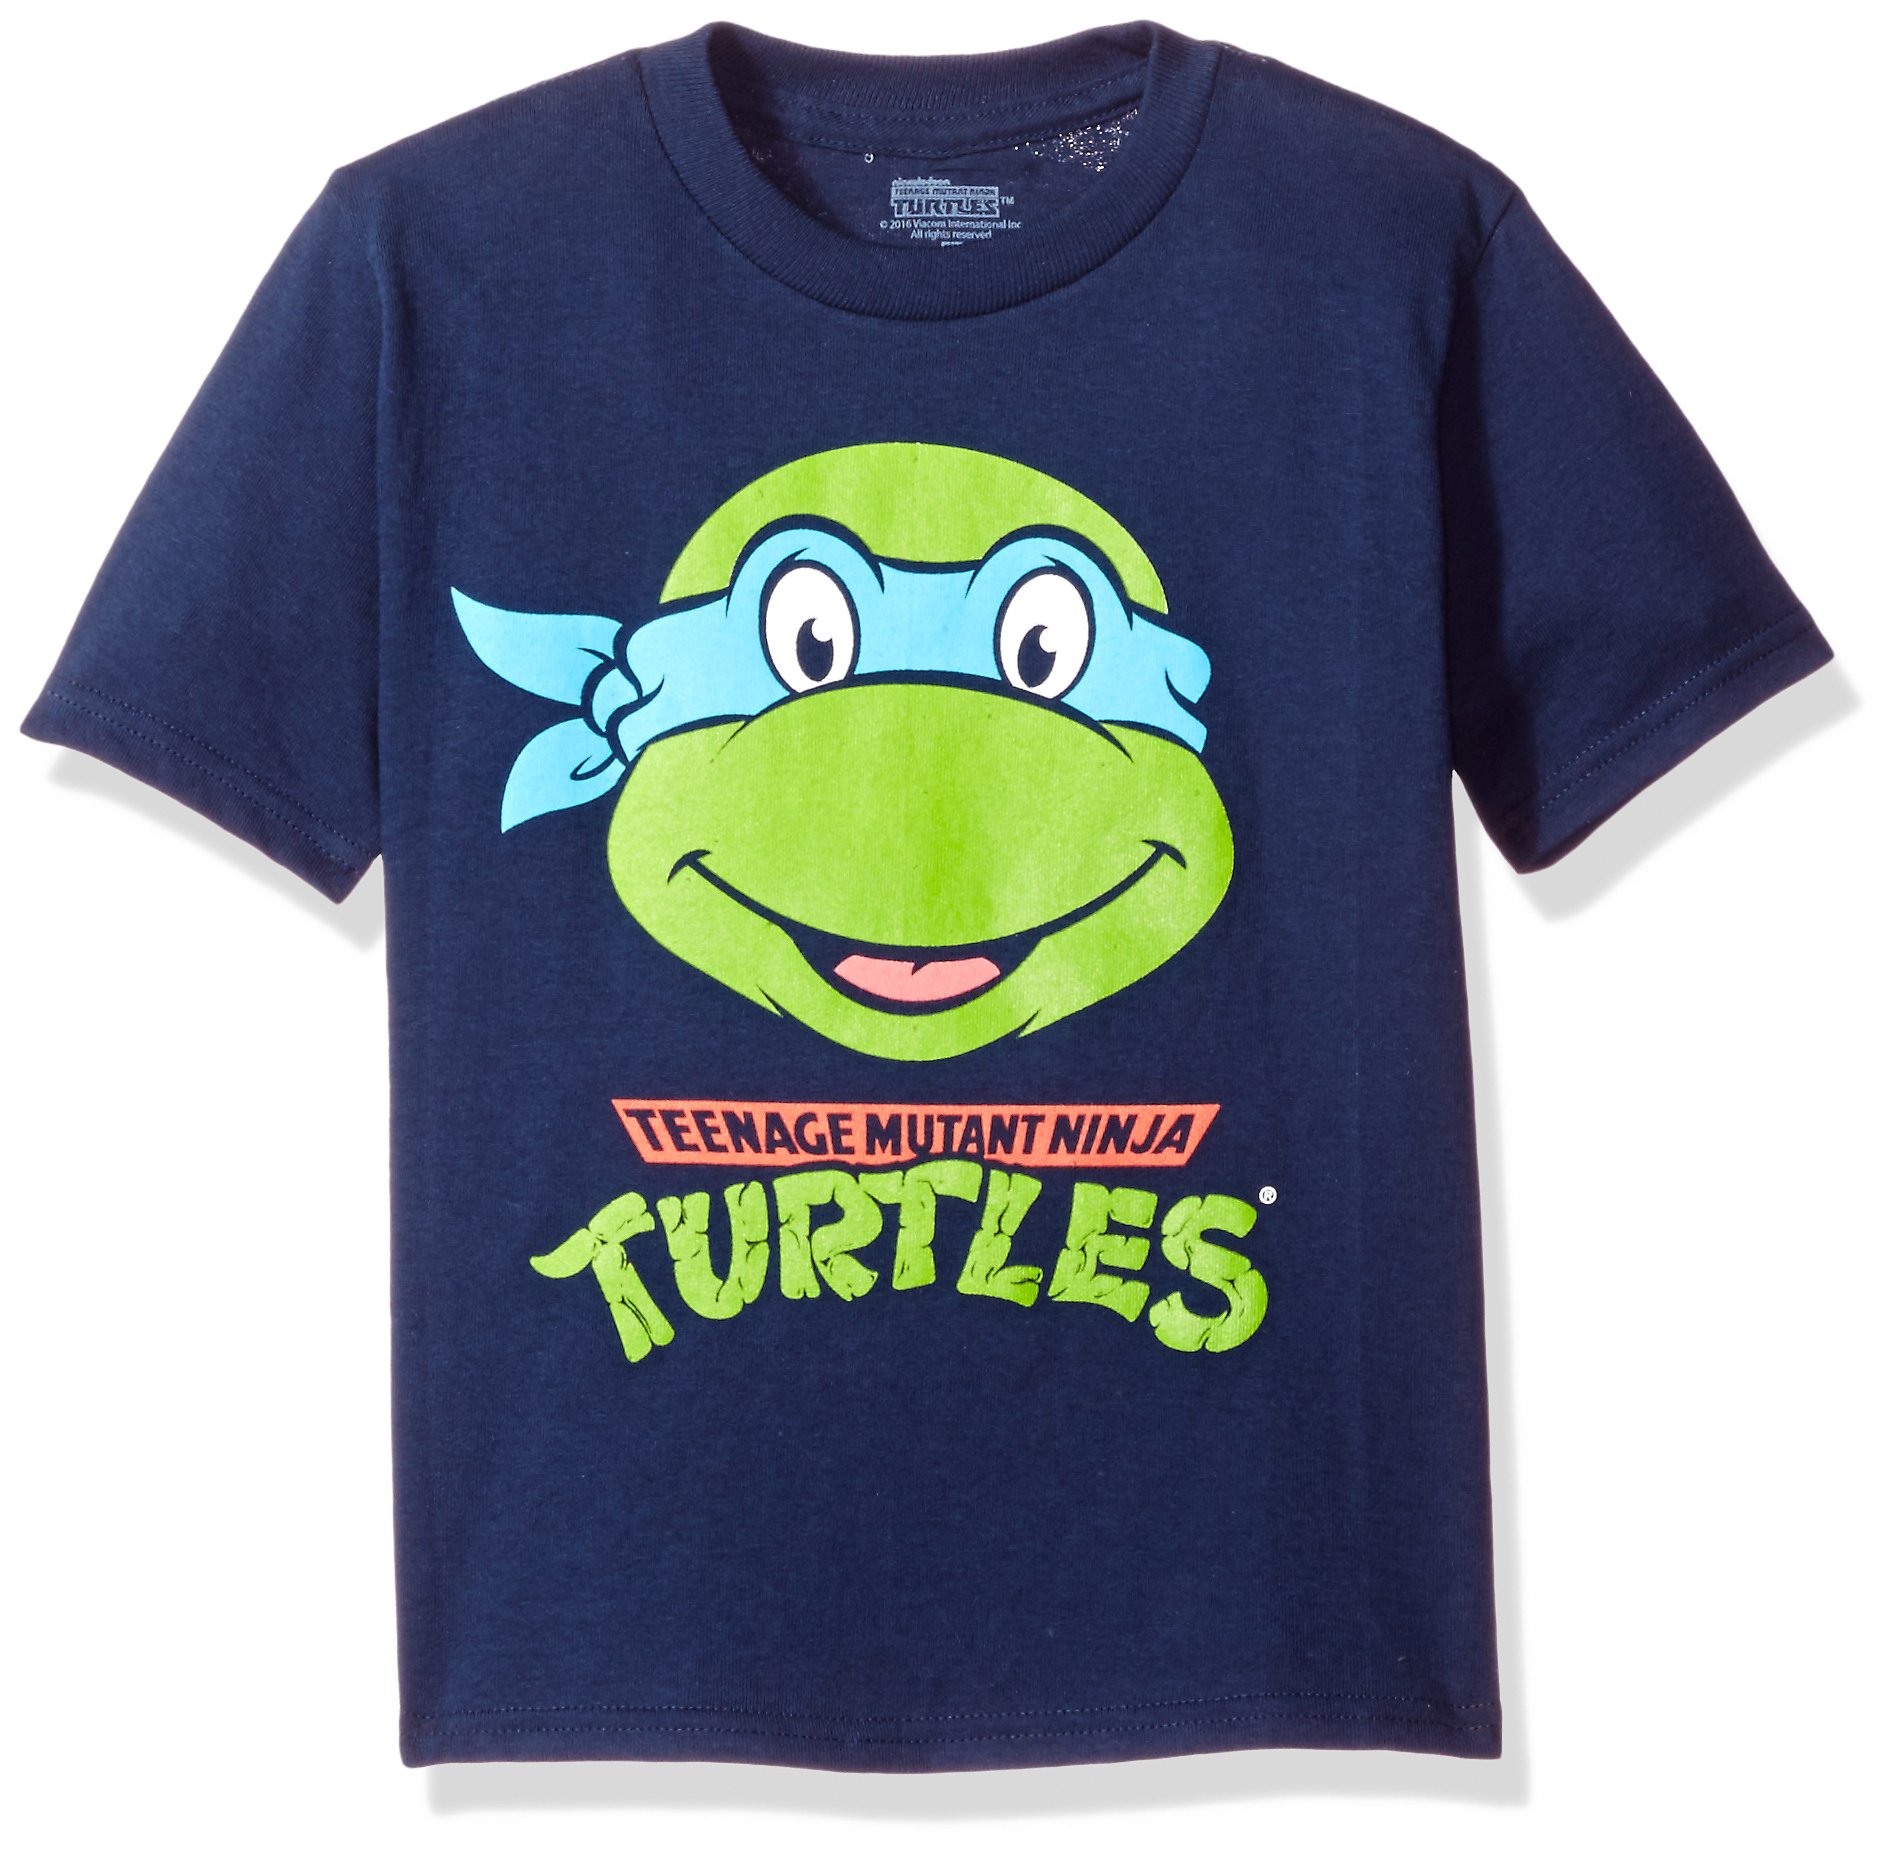 Nickelodeon Boys' Toddler Boys' T-Shirtnage Mutant Ninja Turtles Group T-Shirt Shirt